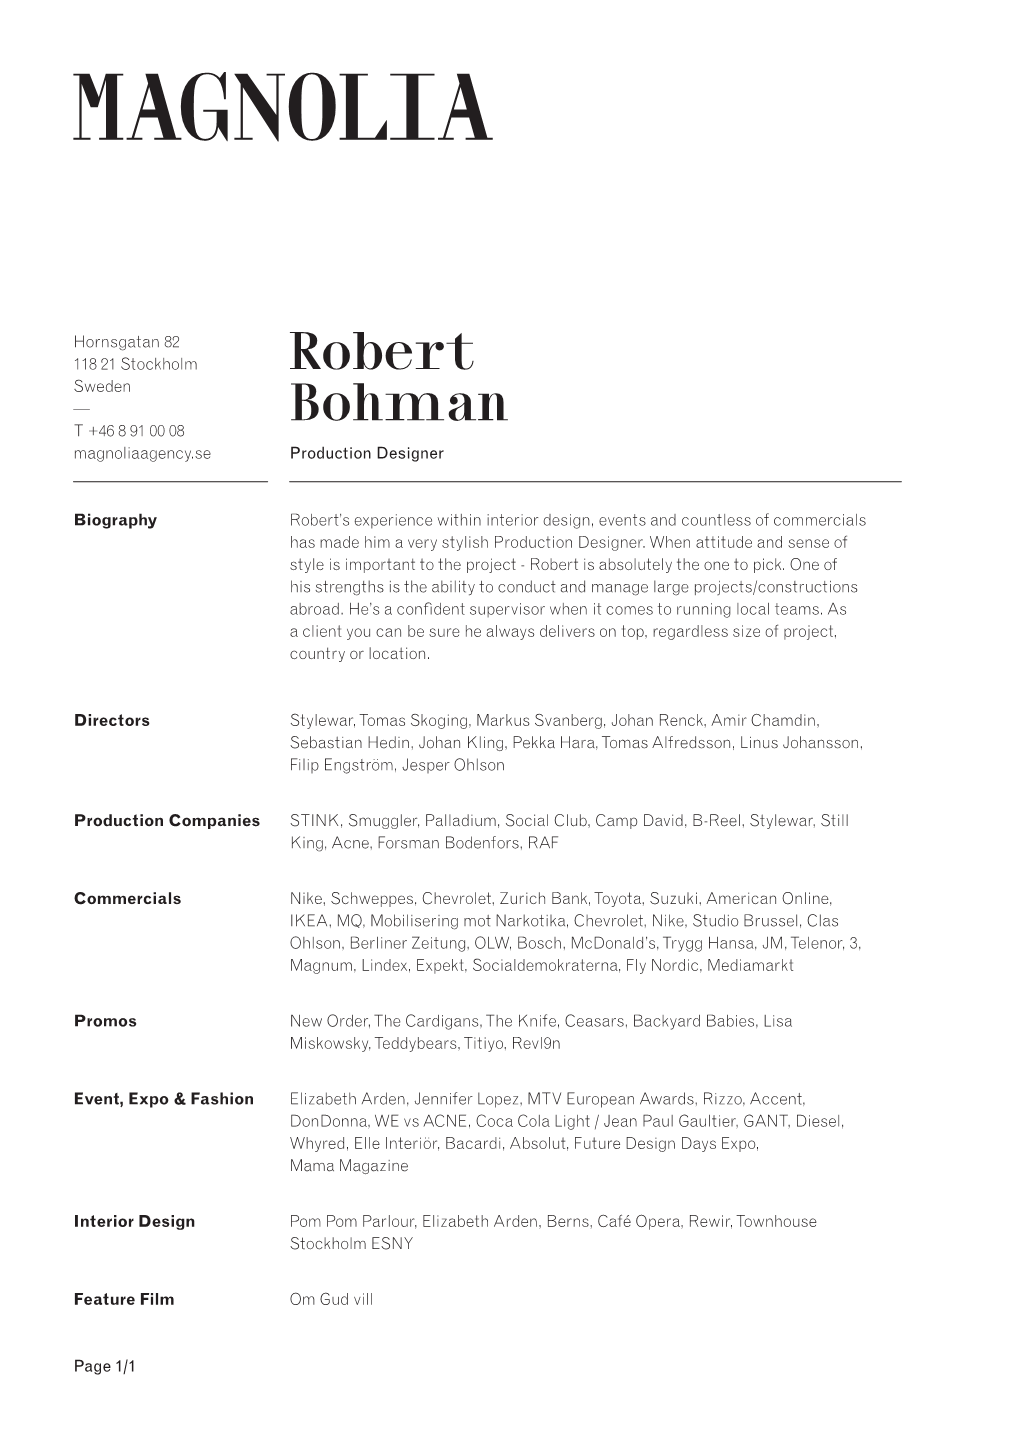 Robert Bohman